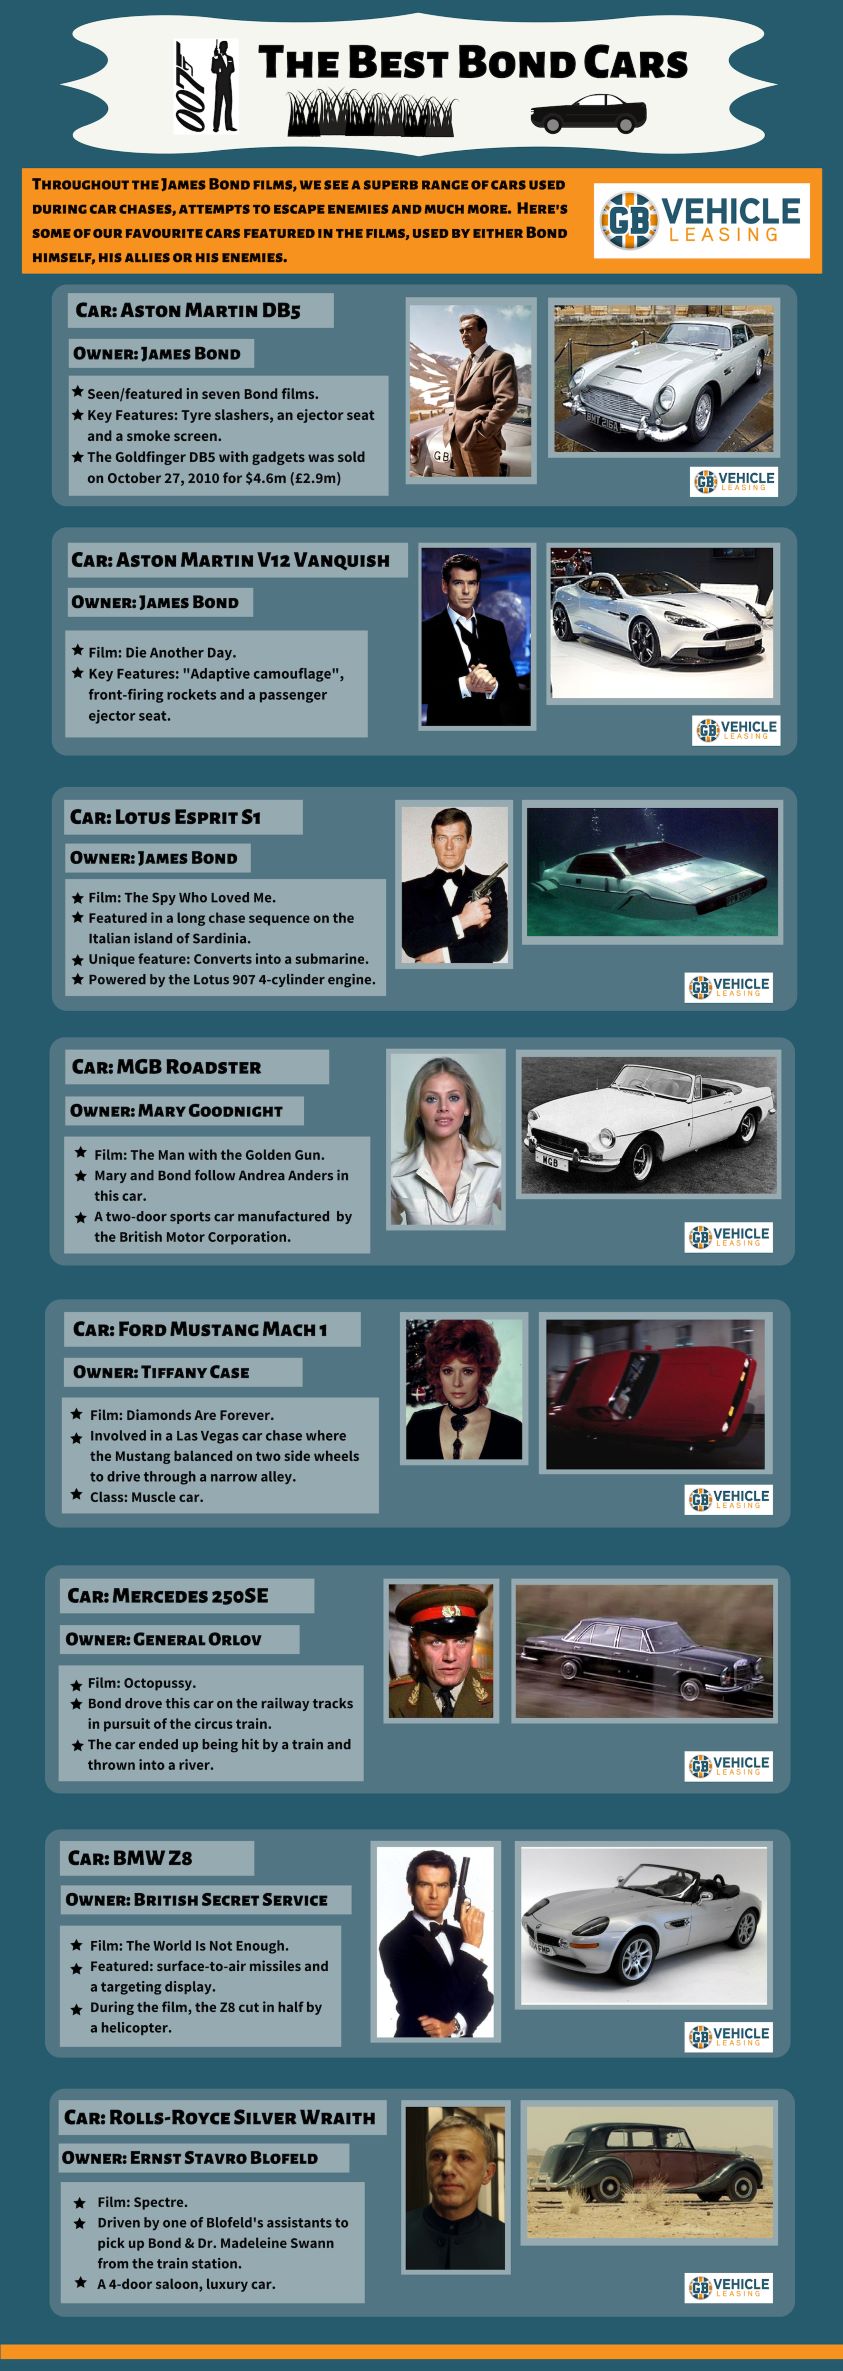 The Best Bond Cars